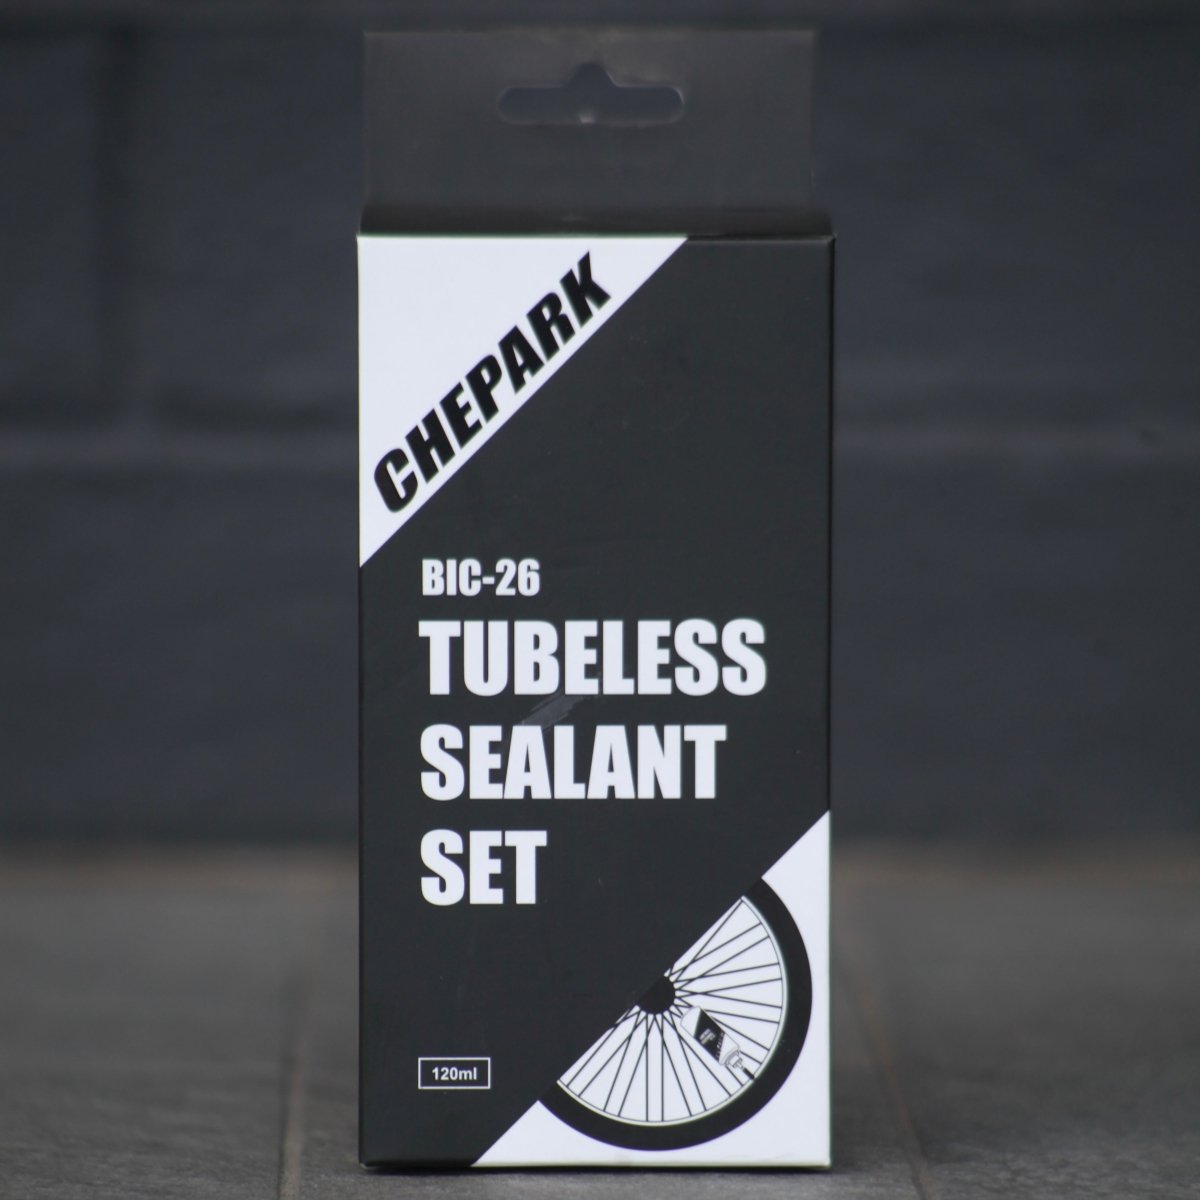 Chepark Tubeless Sealant Set - Aspley Bike Shop